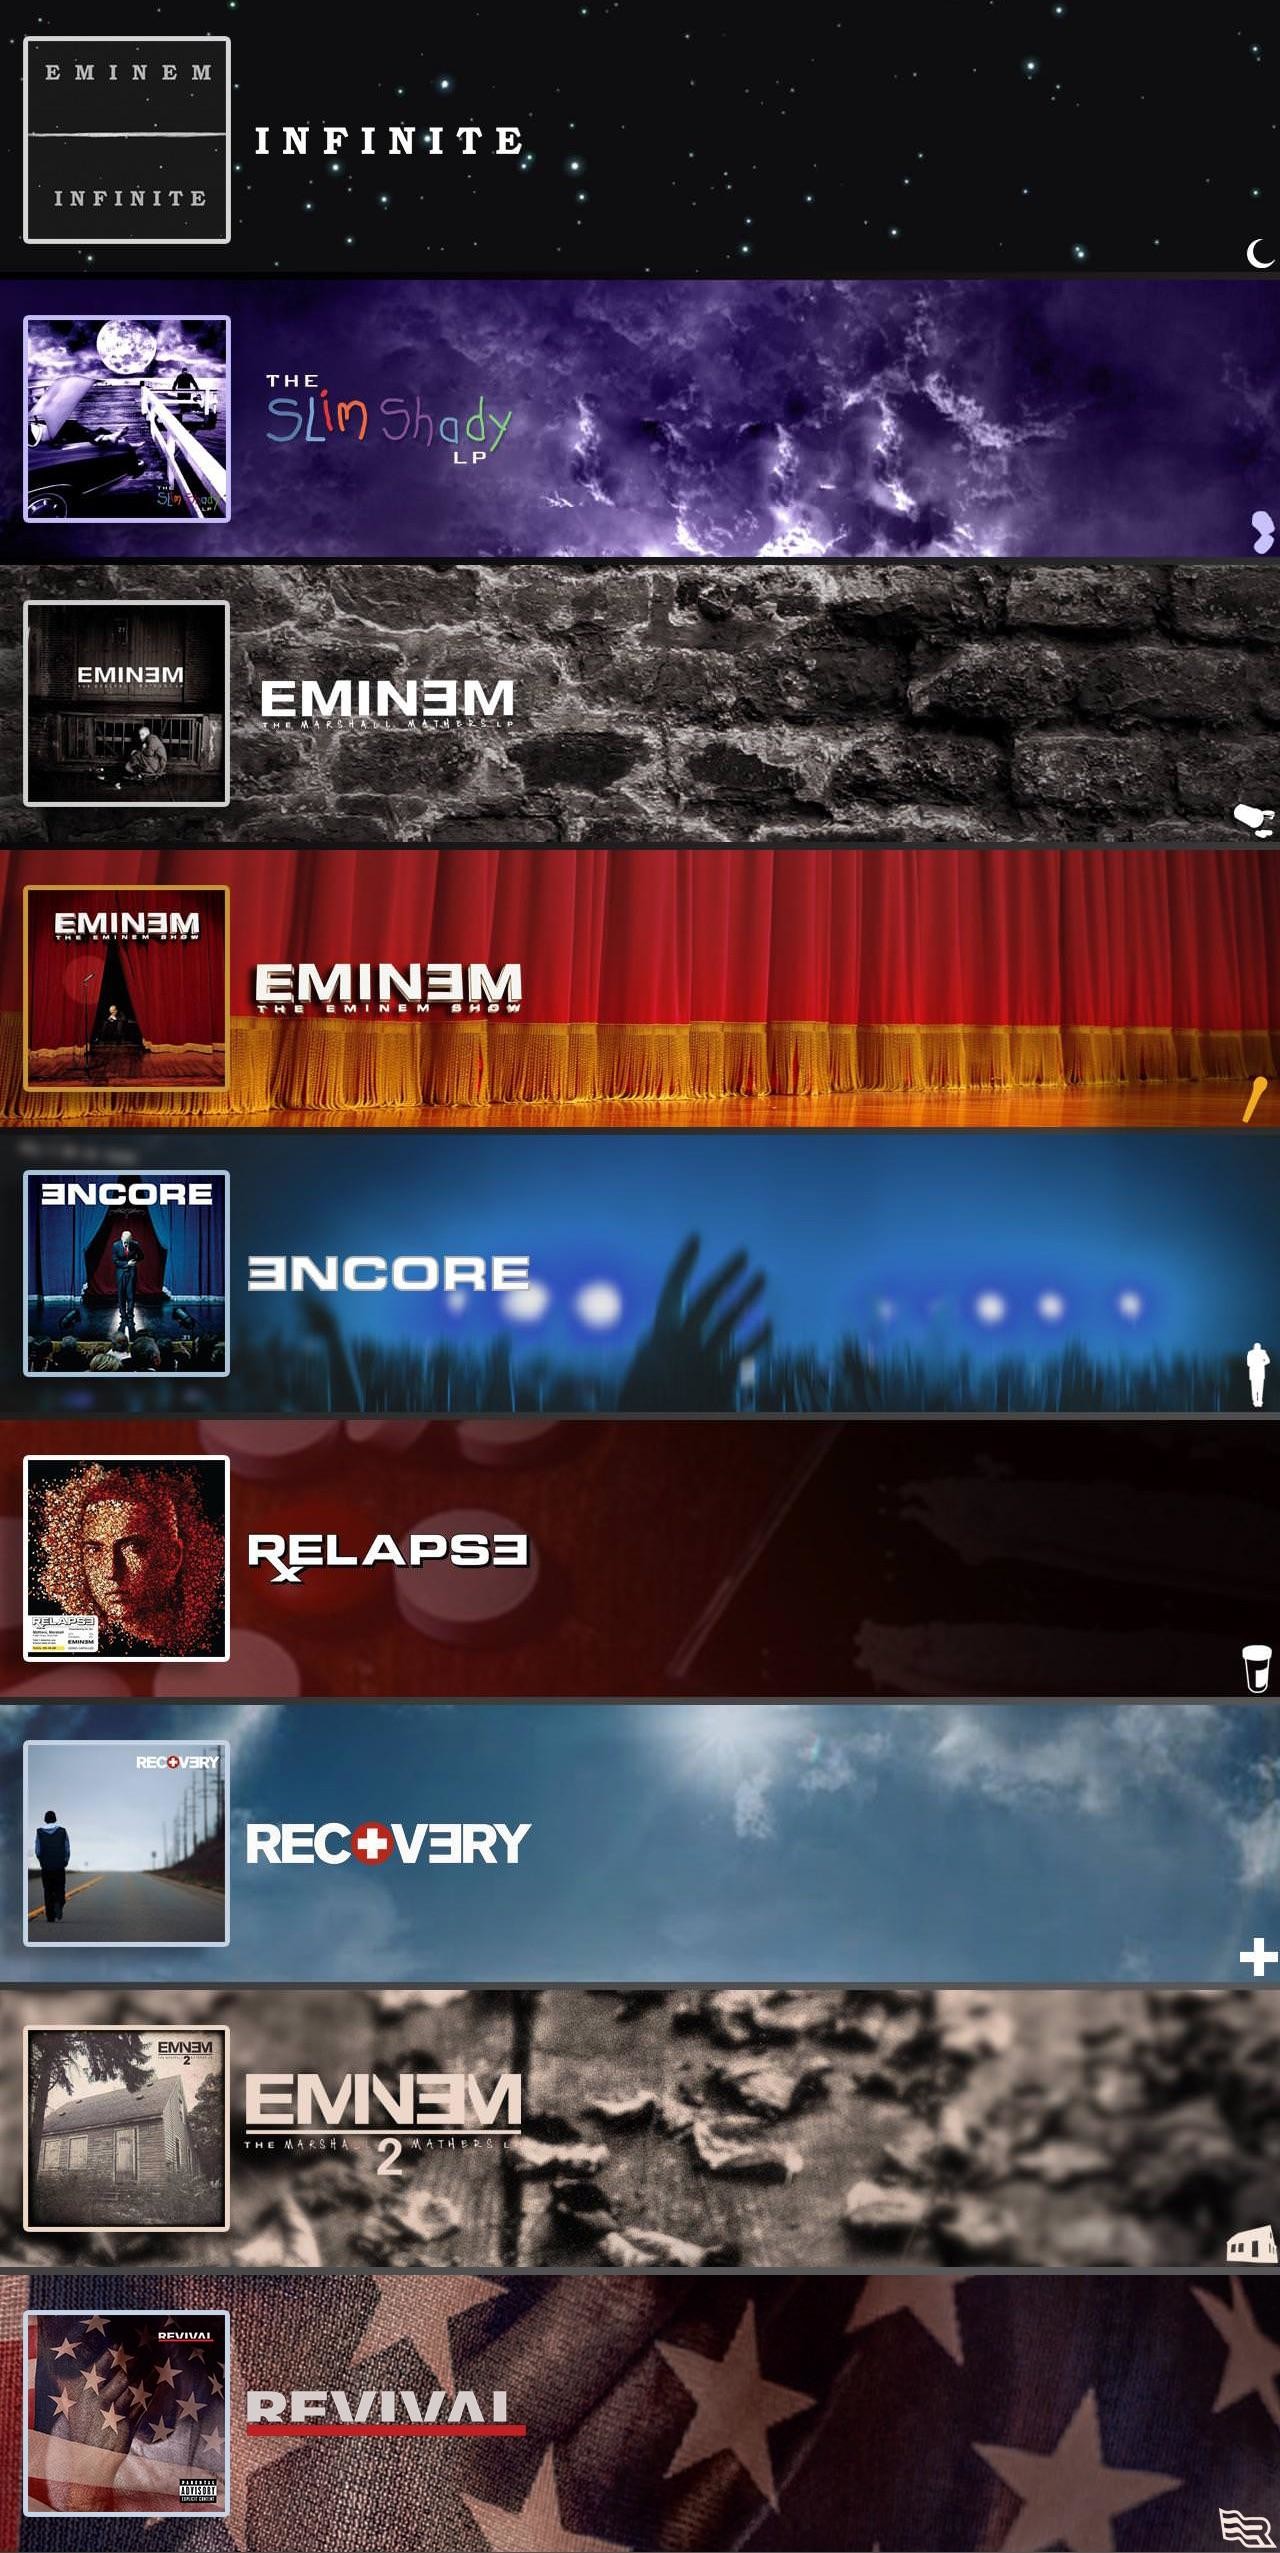 Beautiful Wallpaper Eminem Relapse